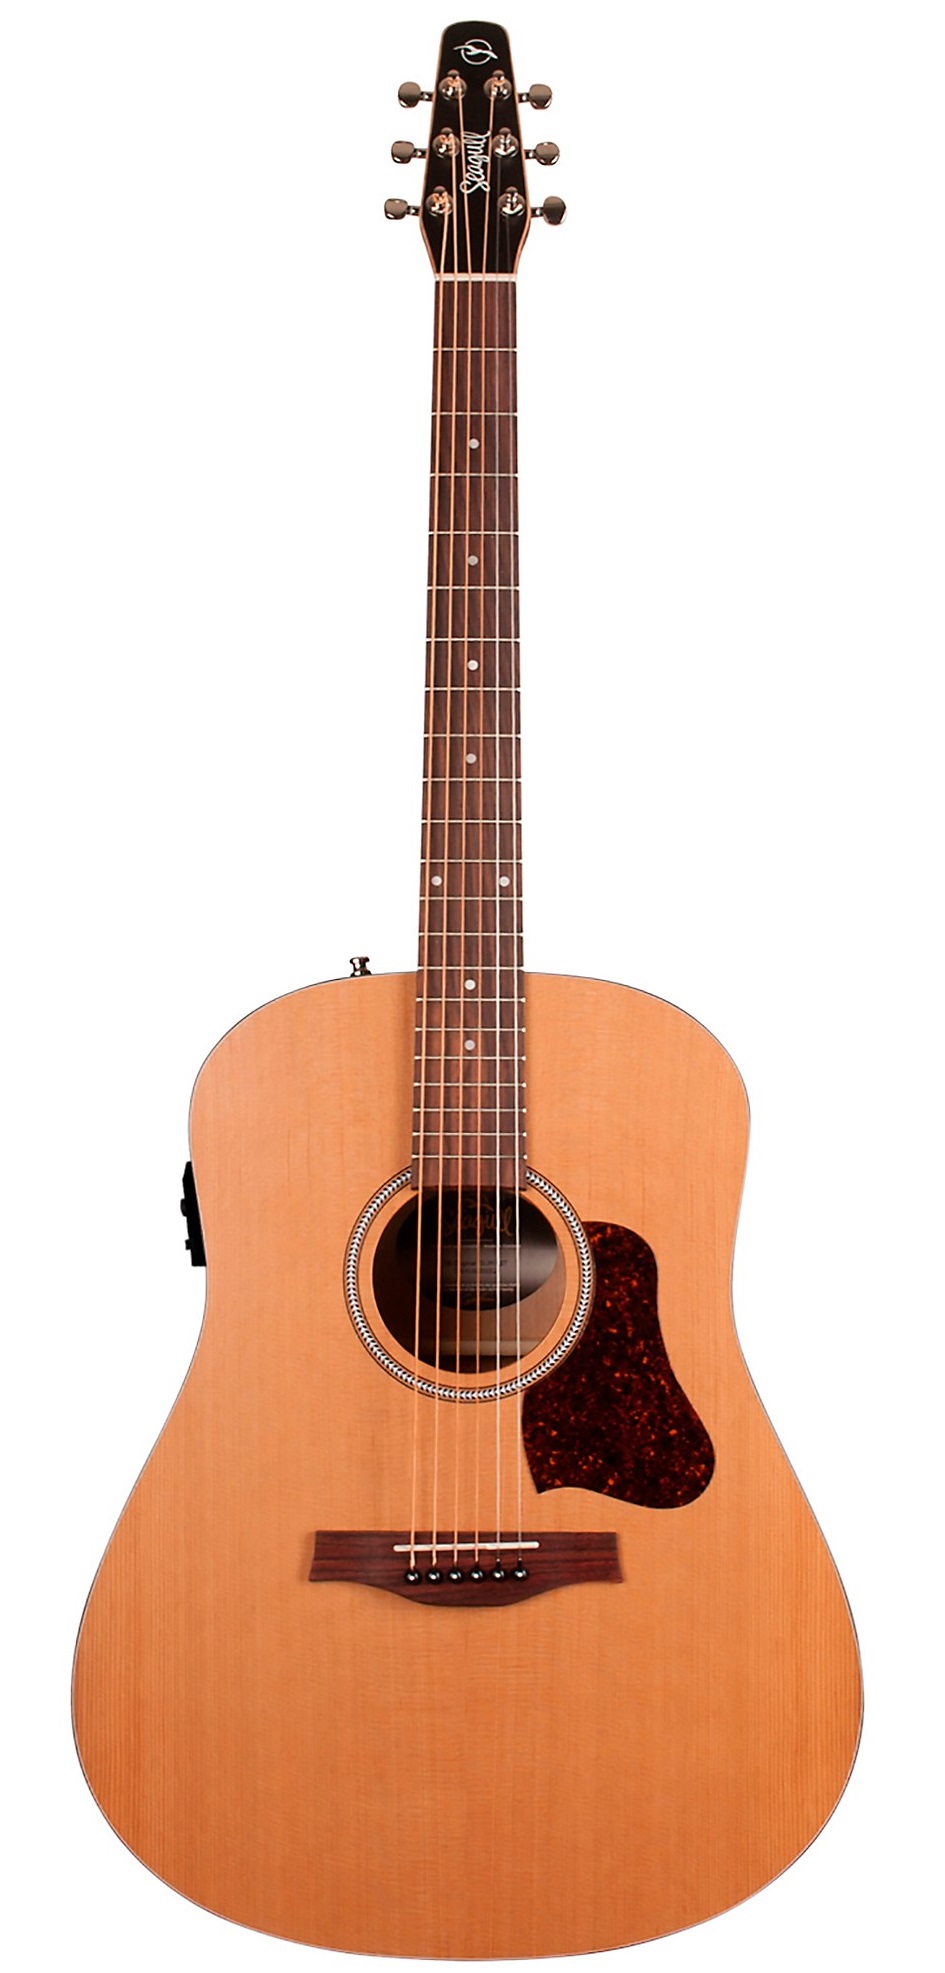 Seagull S6 Cedar Original Slim Acoustic Guitar on a white background